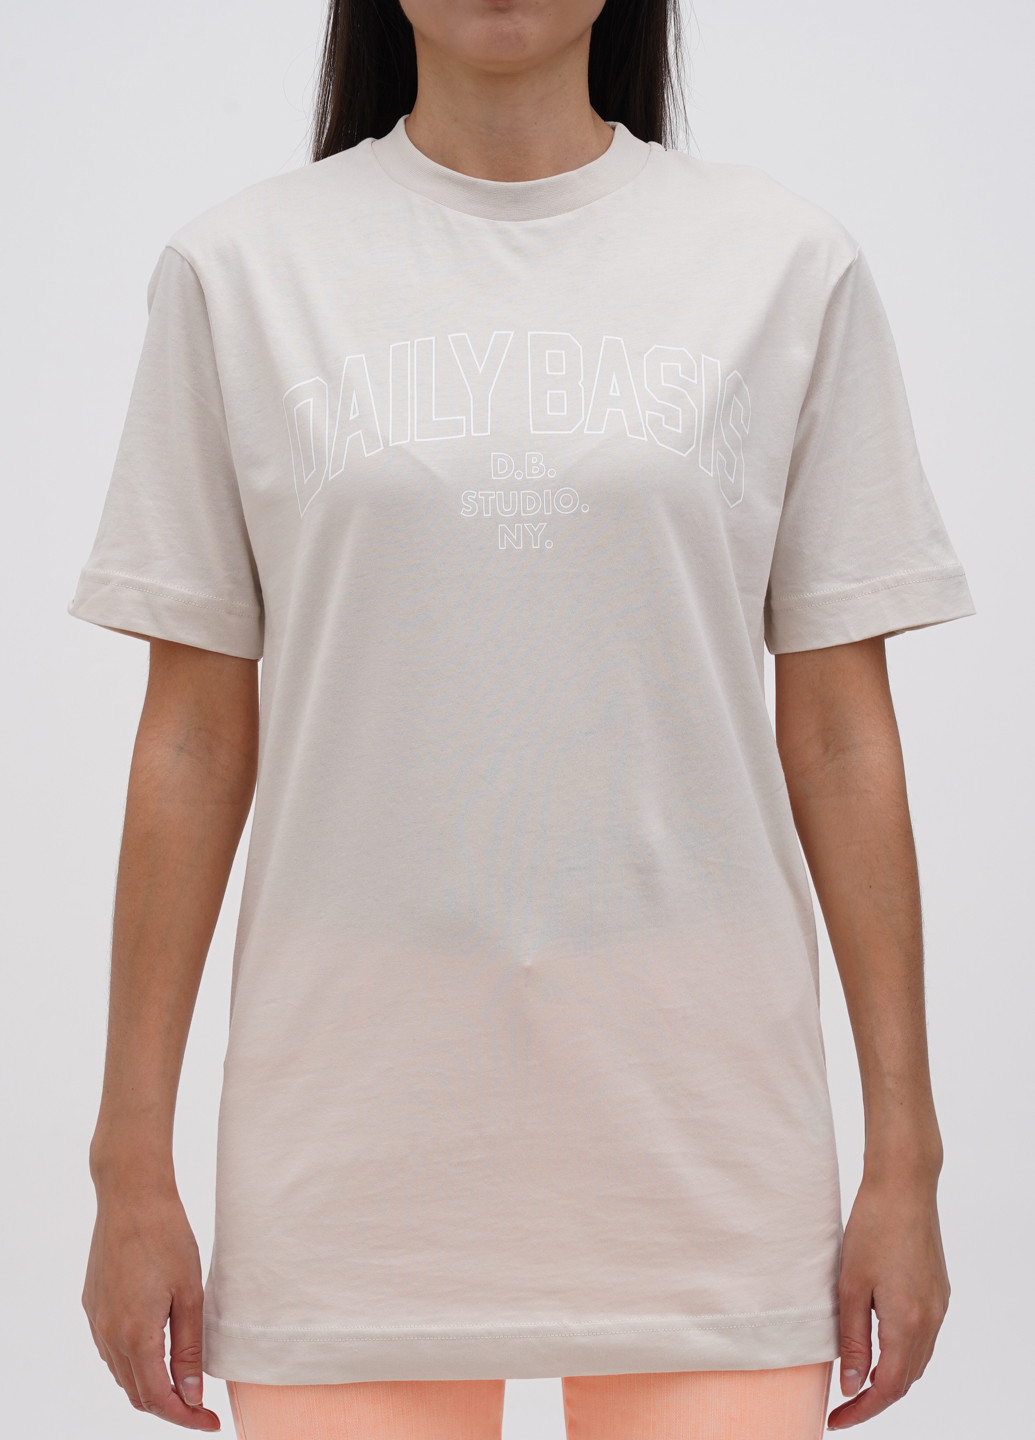 Светло-бежевая летняя футболка Daily Basis Studios